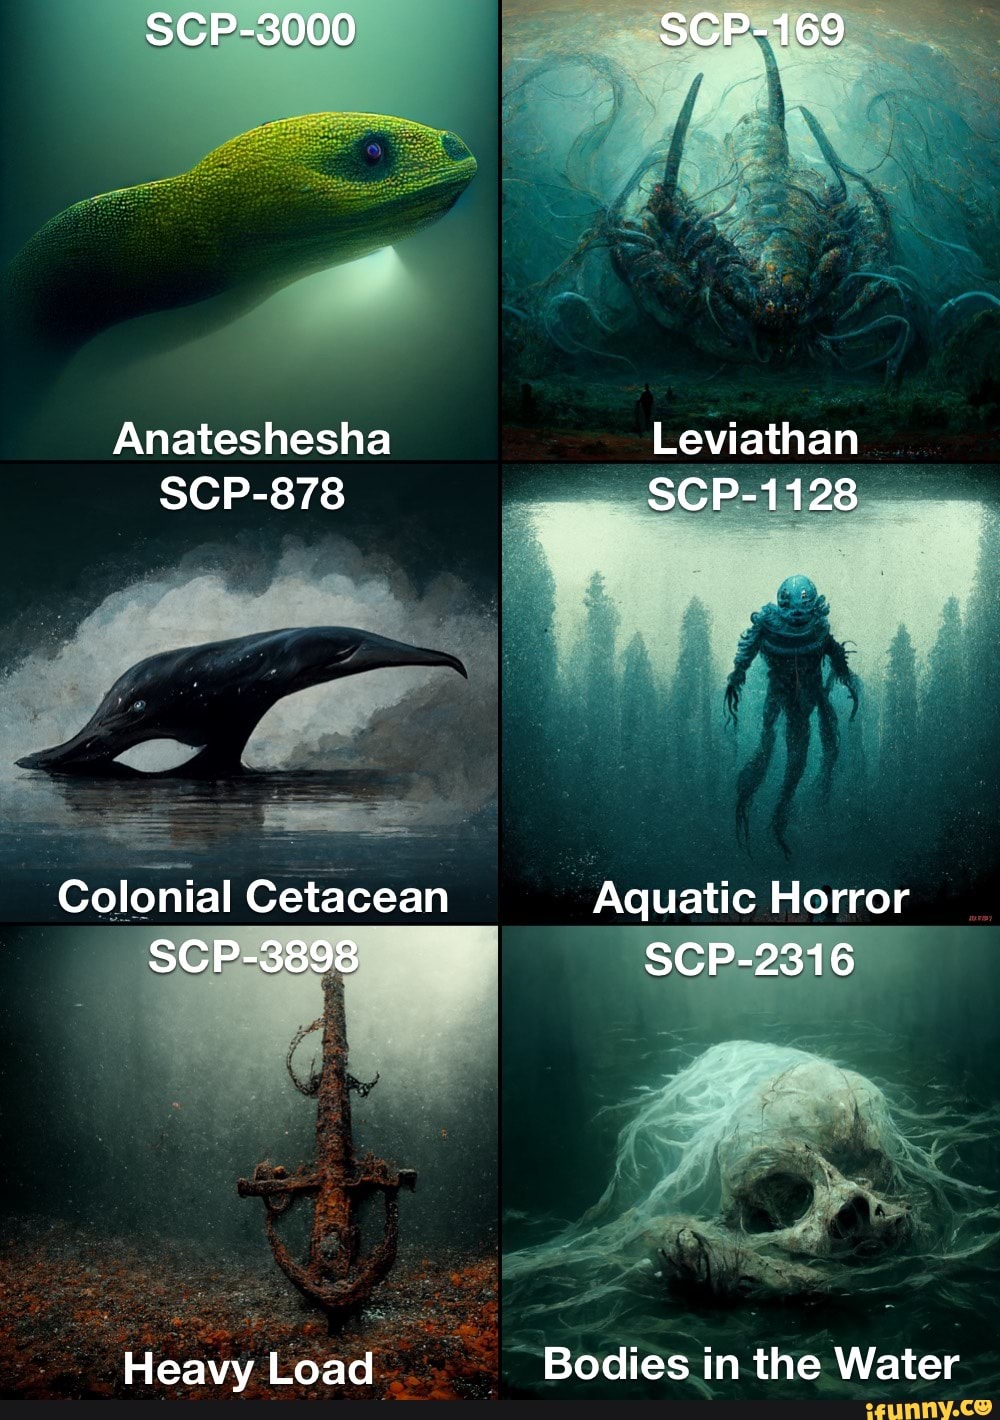 SCP-3000 is a massive, aquatic, - The Infographics Show